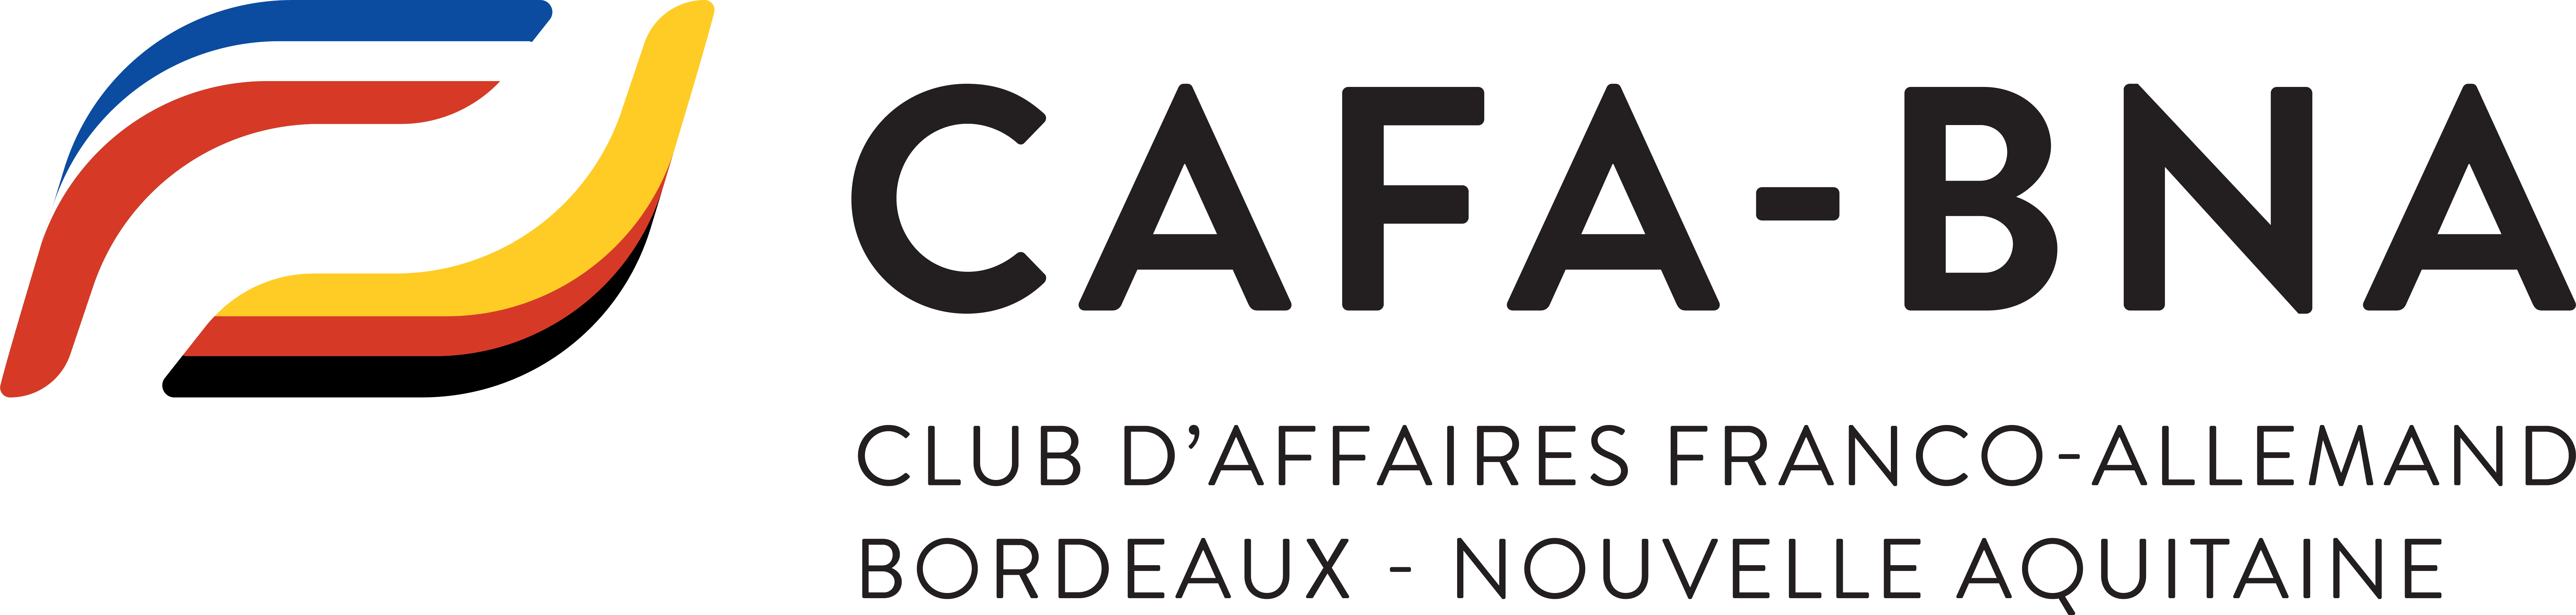 CAFABNA_Logo#2-1